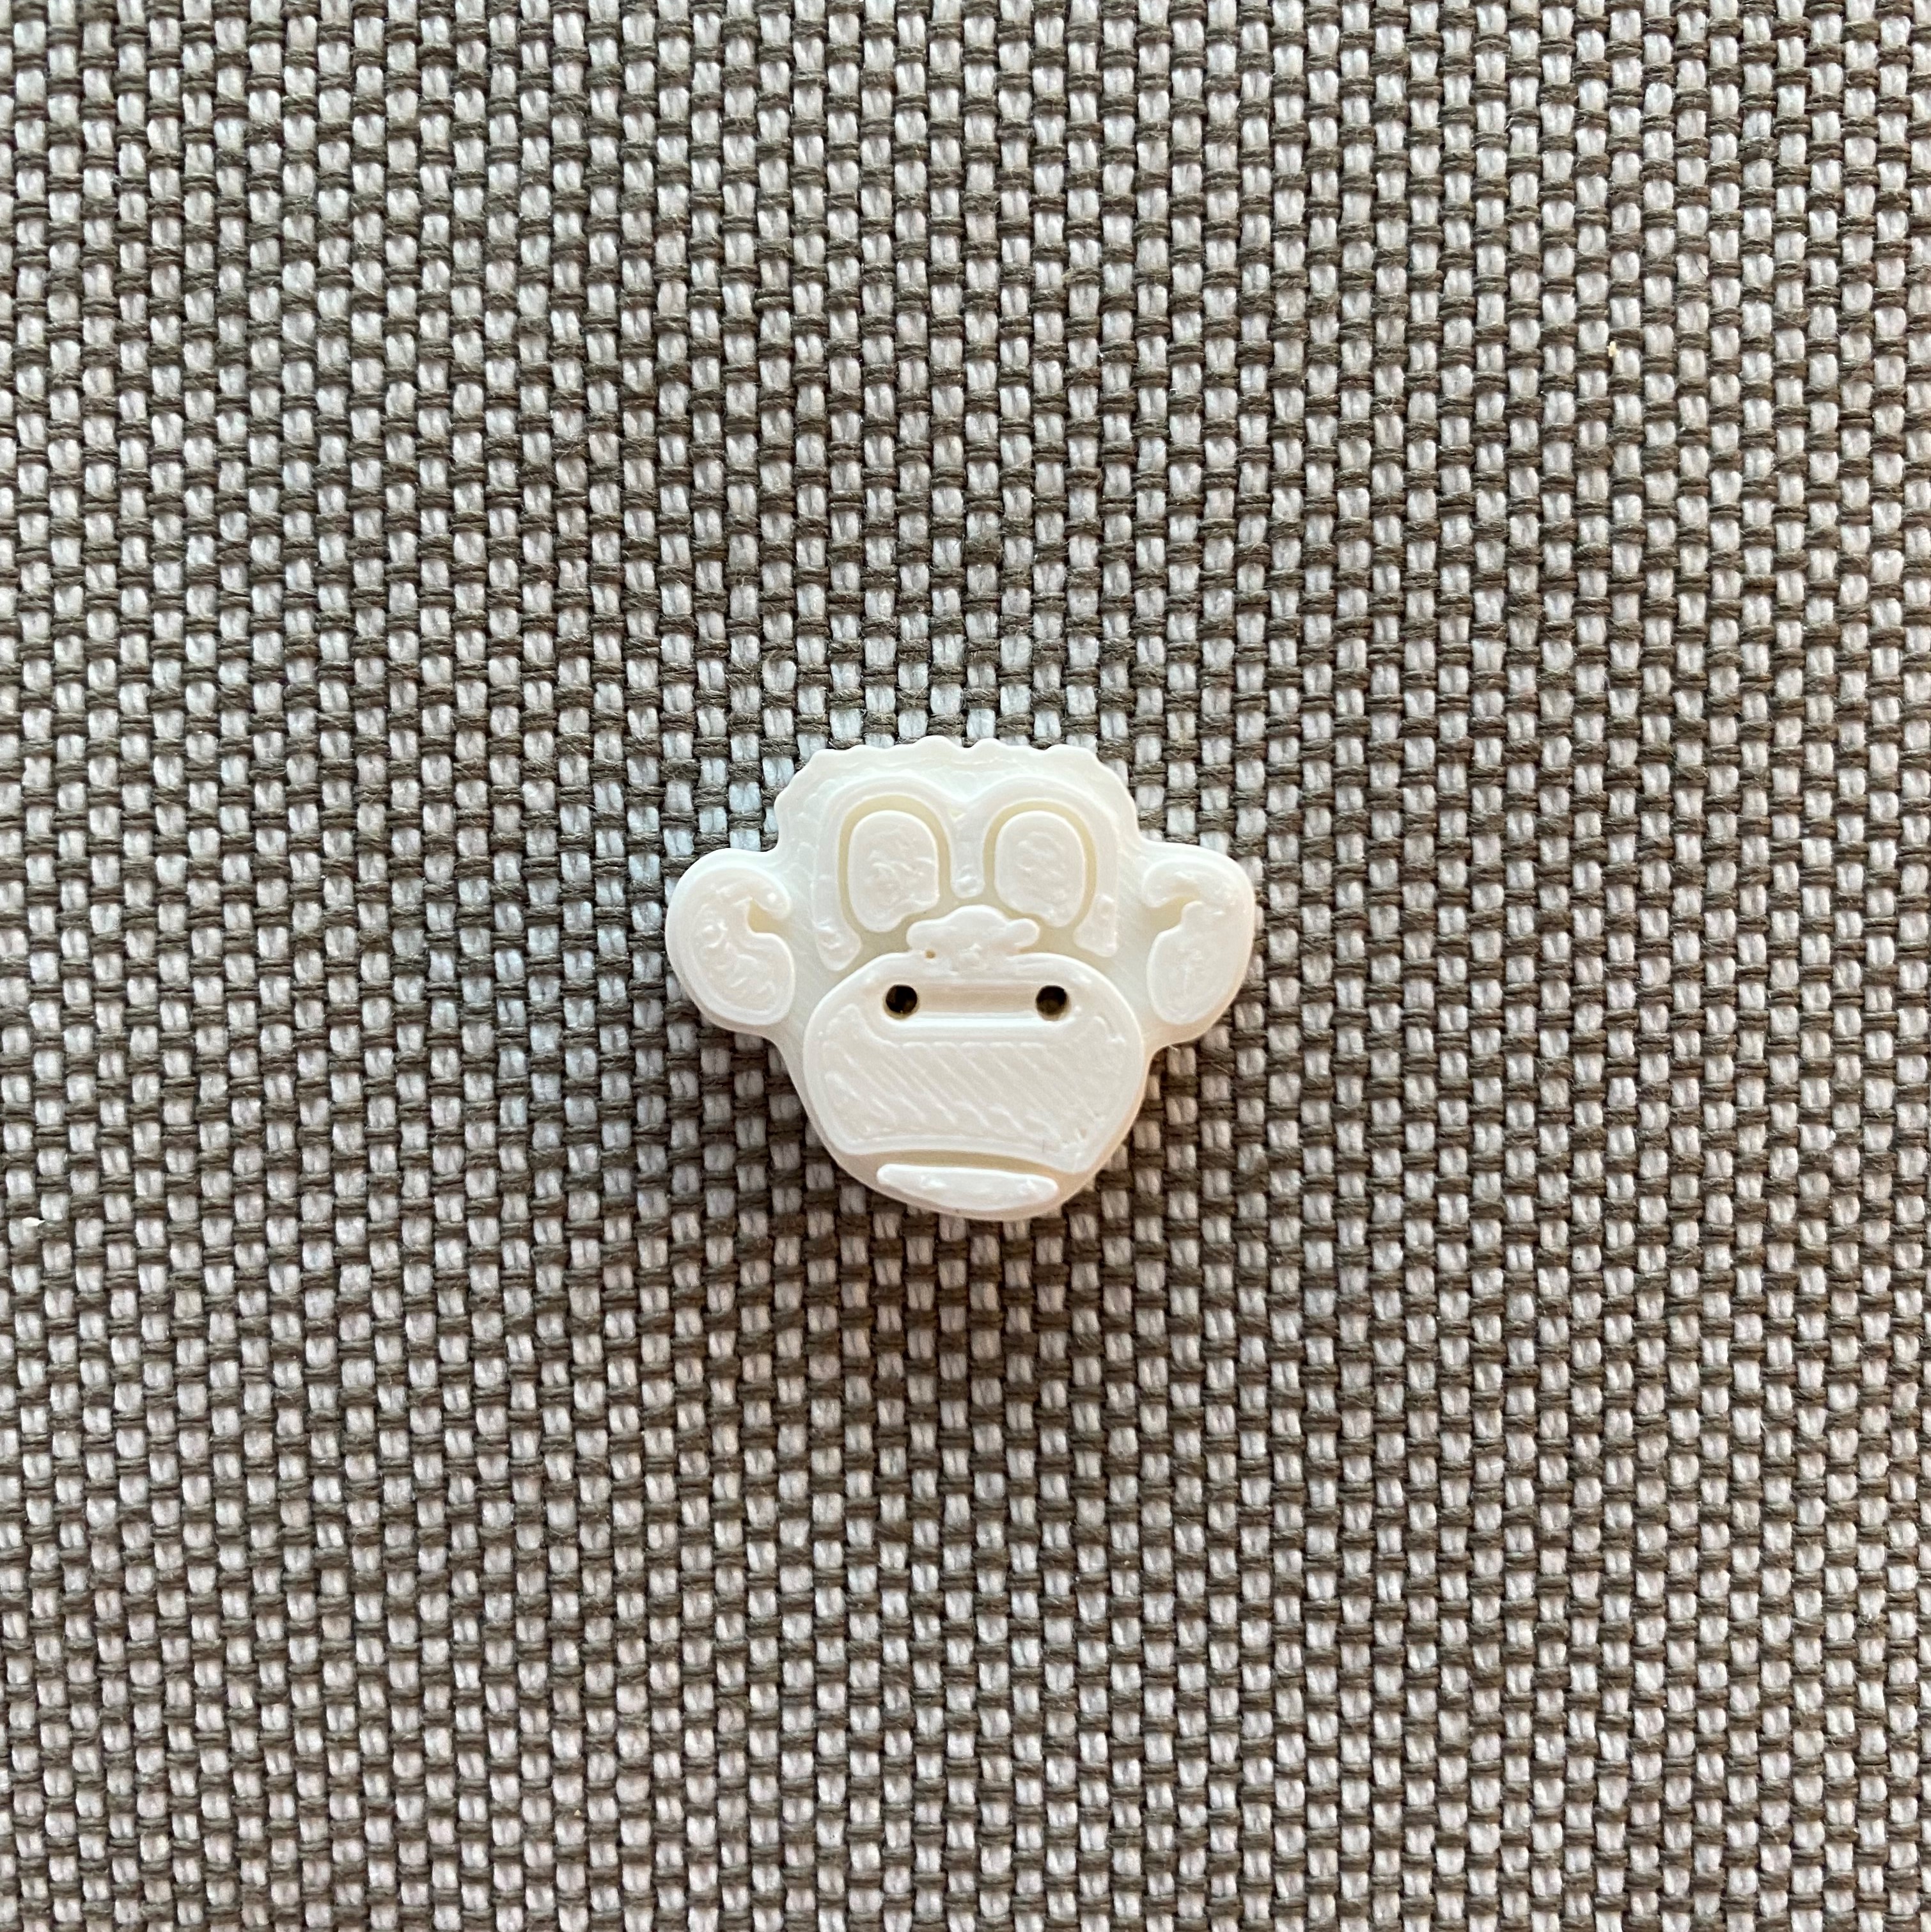 Monkey Face Button